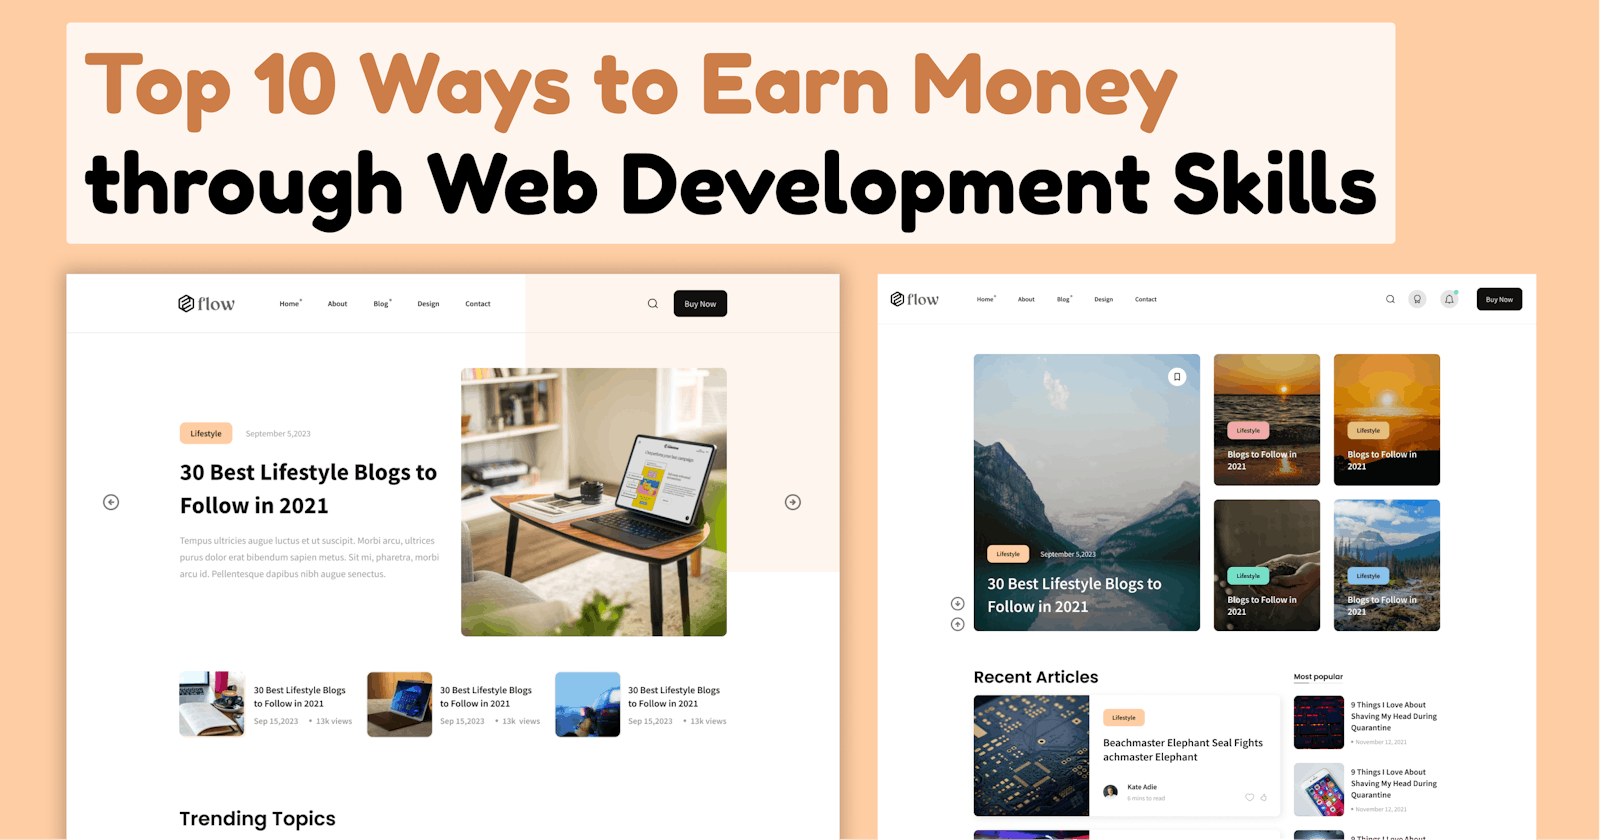 Top 10 Ways to Earn Money through Web Development Skills